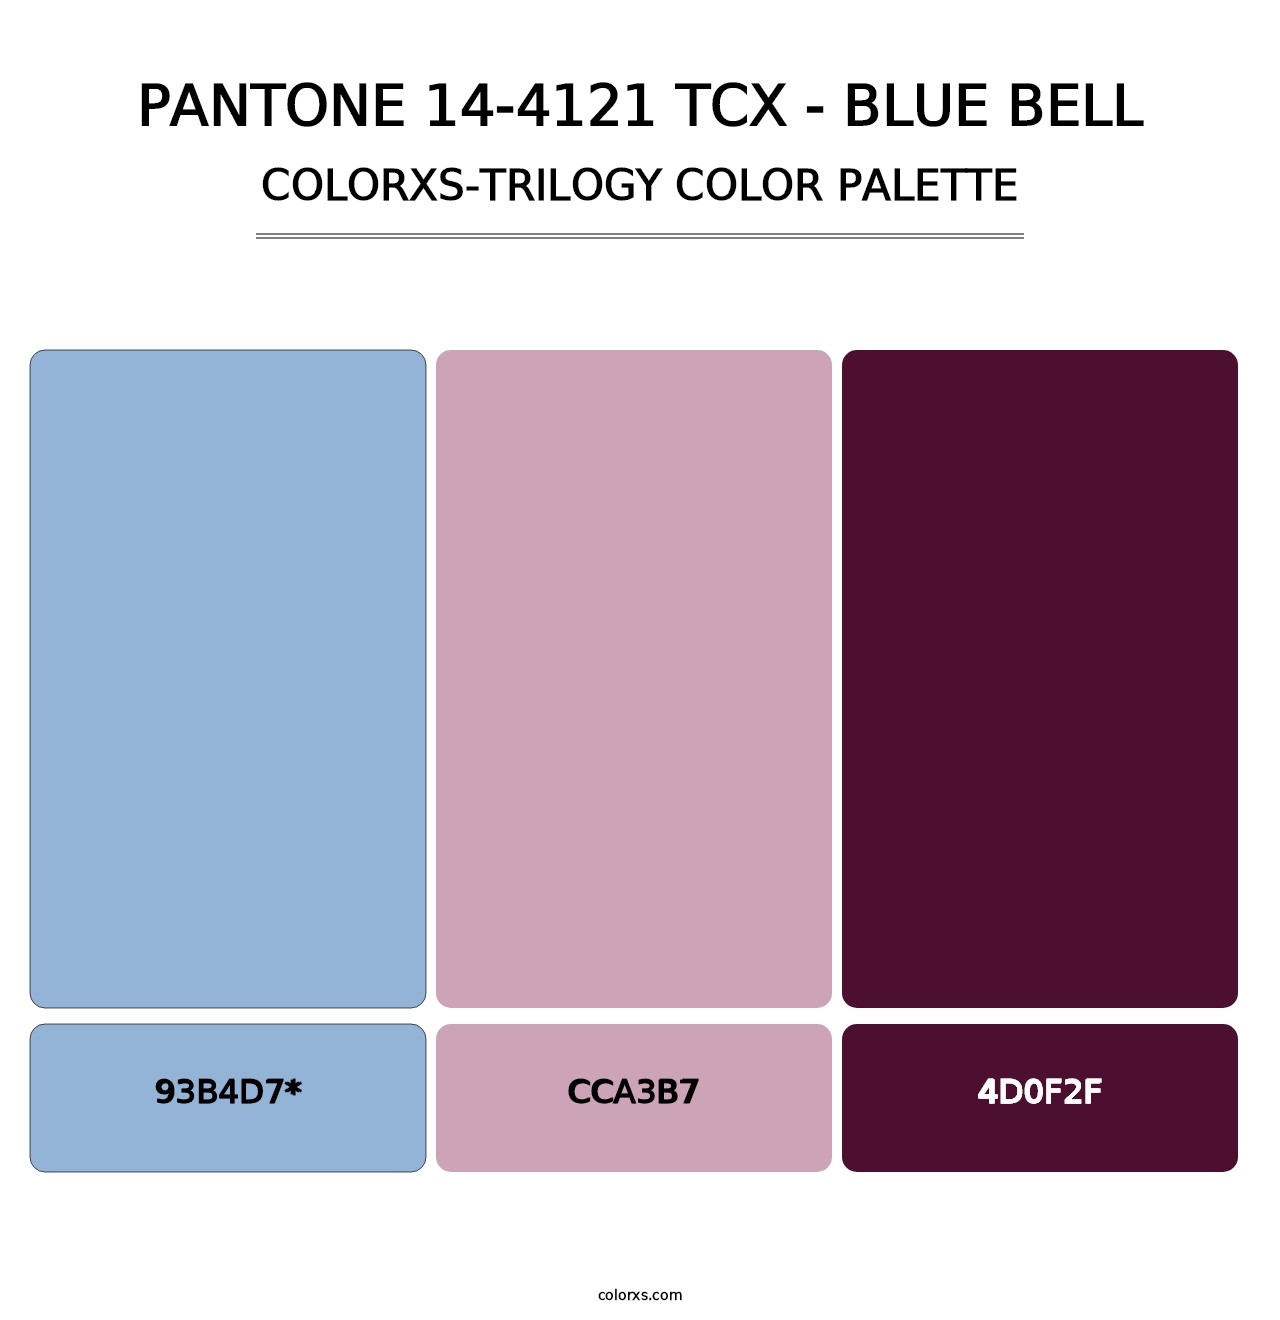 PANTONE 14-4121 TCX - Blue Bell - Colorxs Trilogy Palette